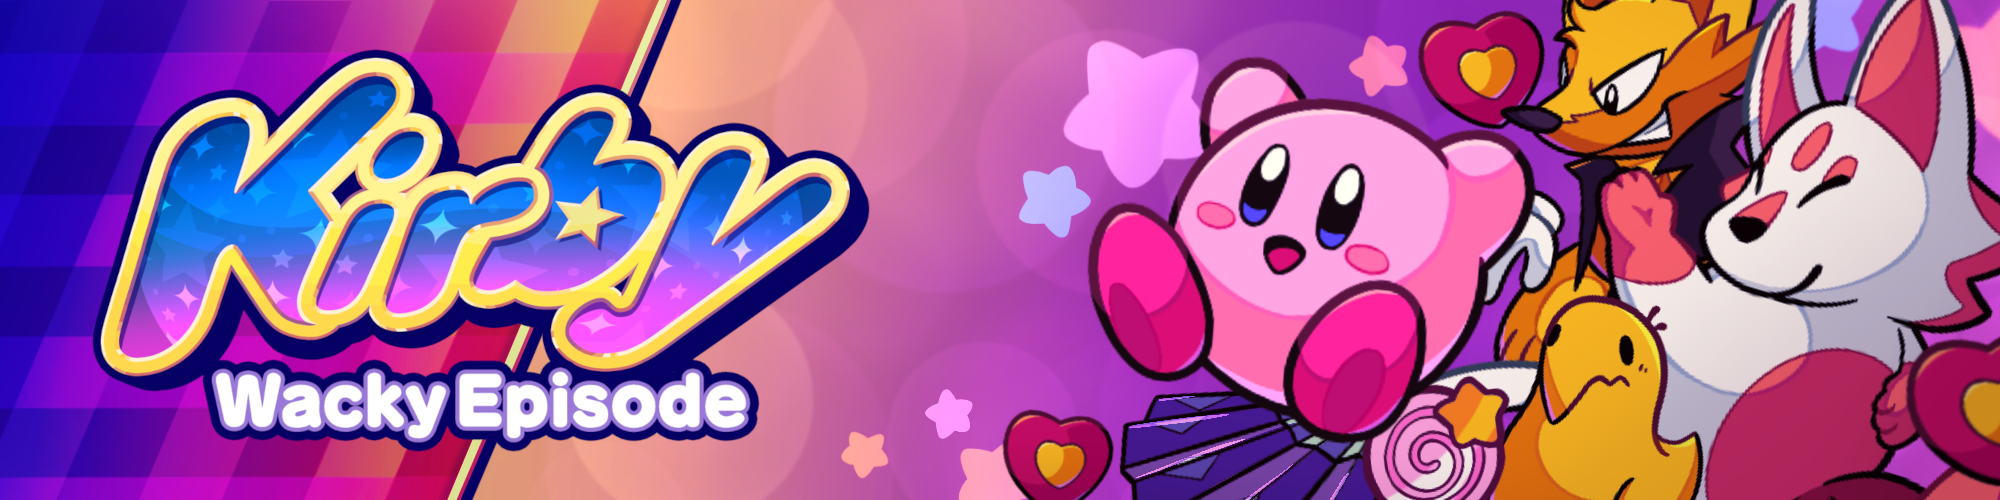 Kirby: Wacky Episode